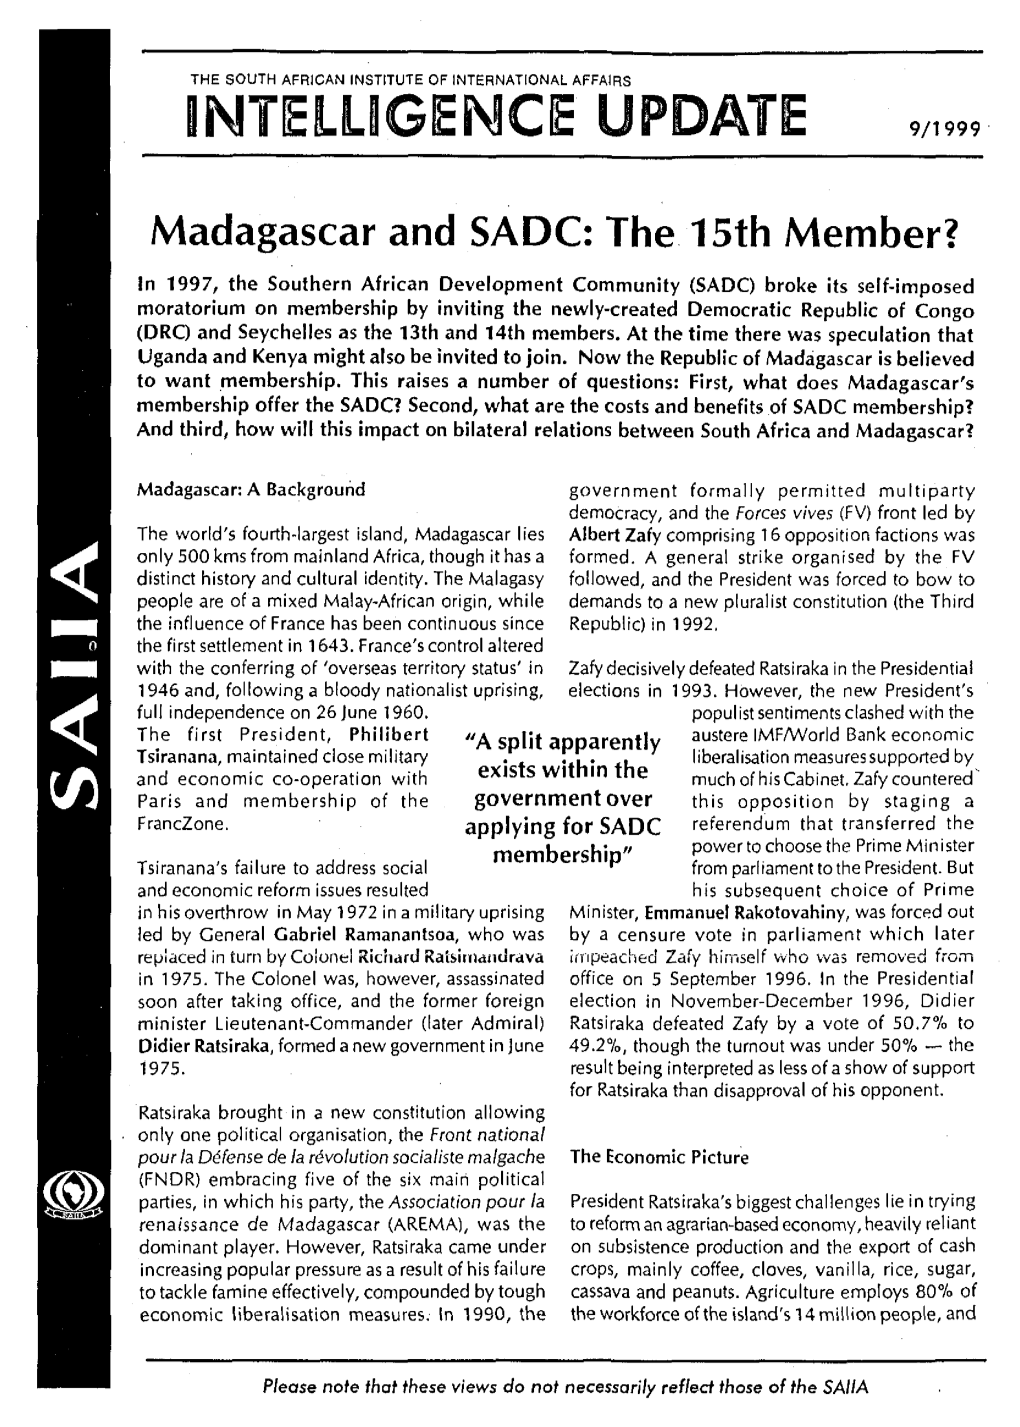 Madagascar and SADC: the 15Th Member?